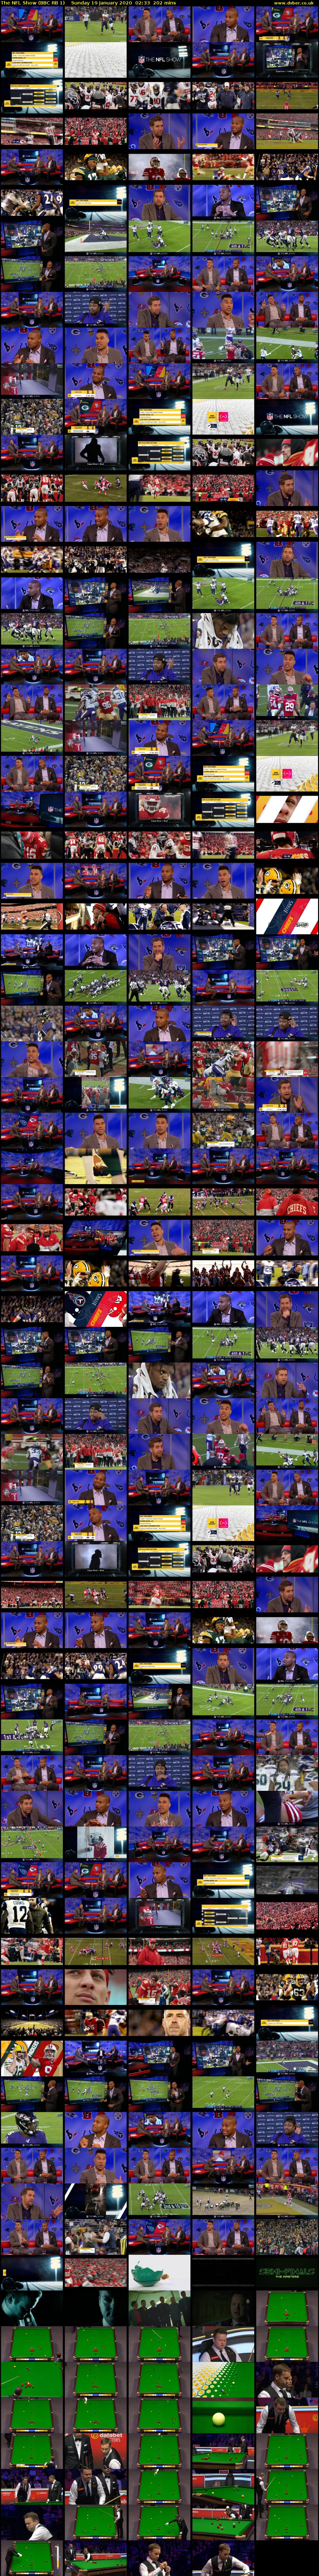 The NFL Show (BBC RB 1) Sunday 19 January 2020 02:33 - 05:55